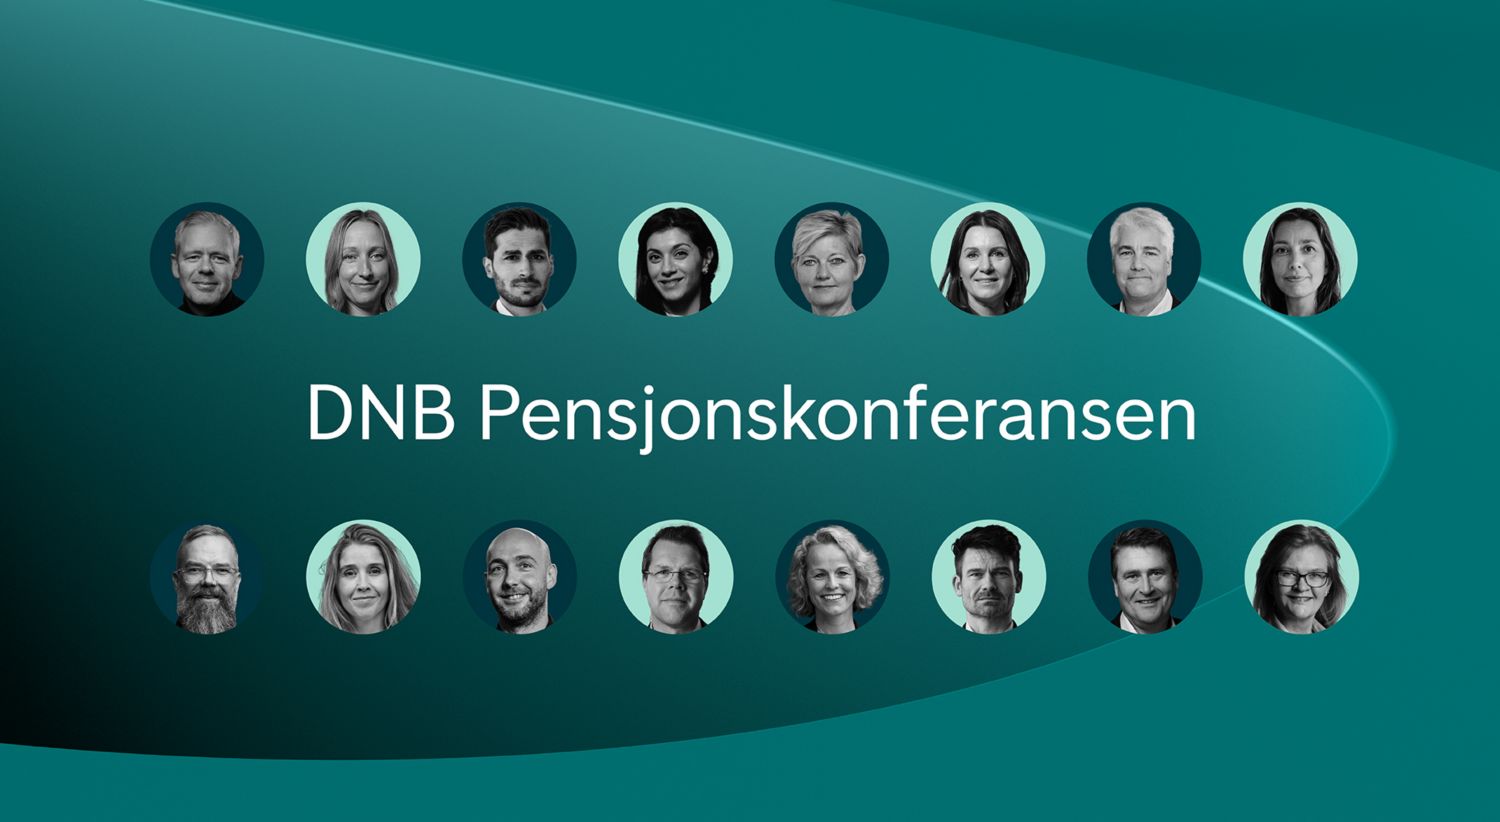 Pensions Conference 16 9 u Kloppen